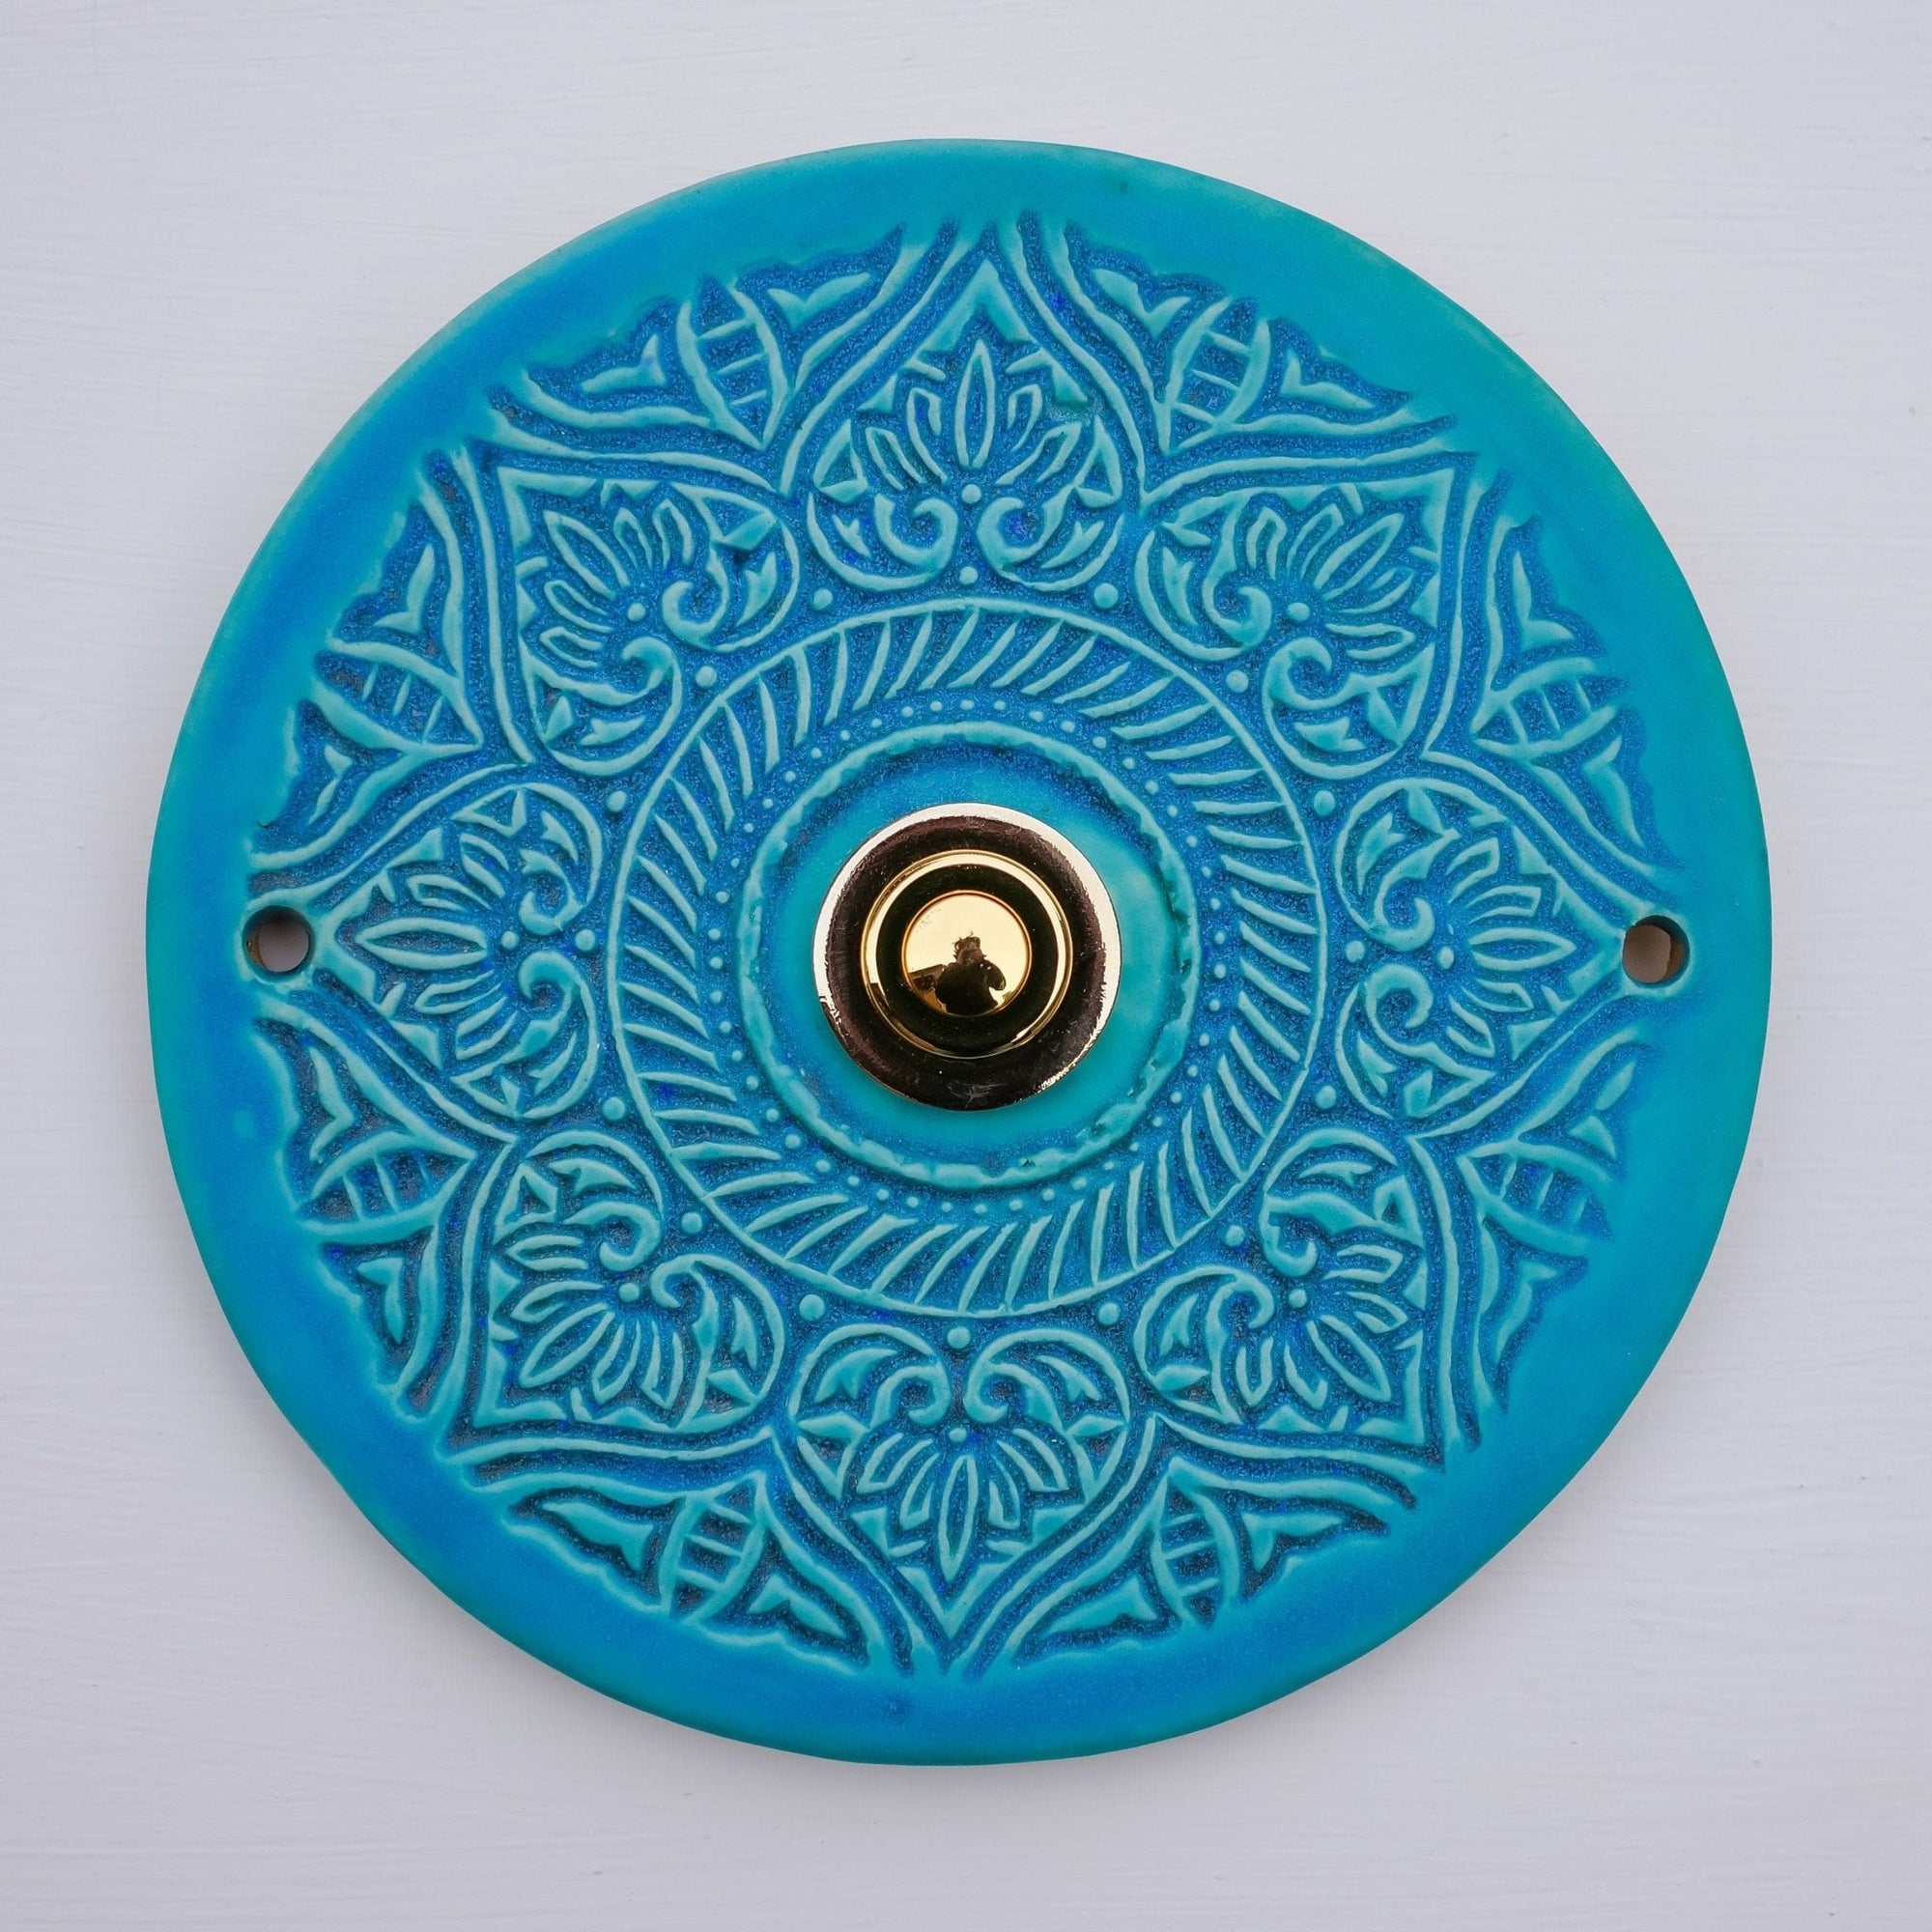 F Bell plate, ceramic bell sign (14-15 cm)